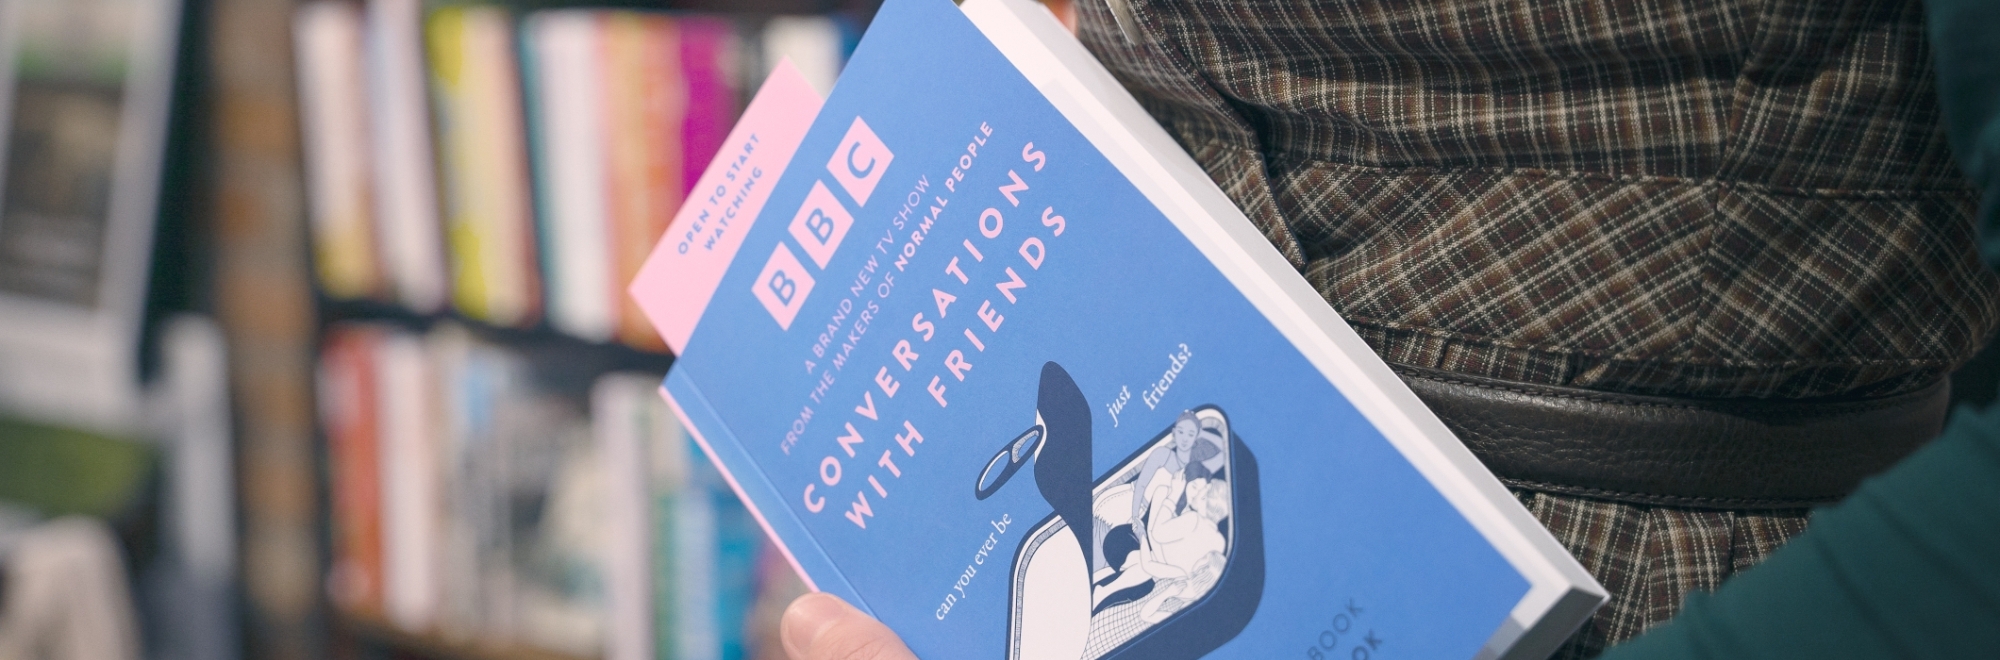 BBC Creative celebrates BBC Three’s Conversation With Friends in bookshops across Northern Ireland